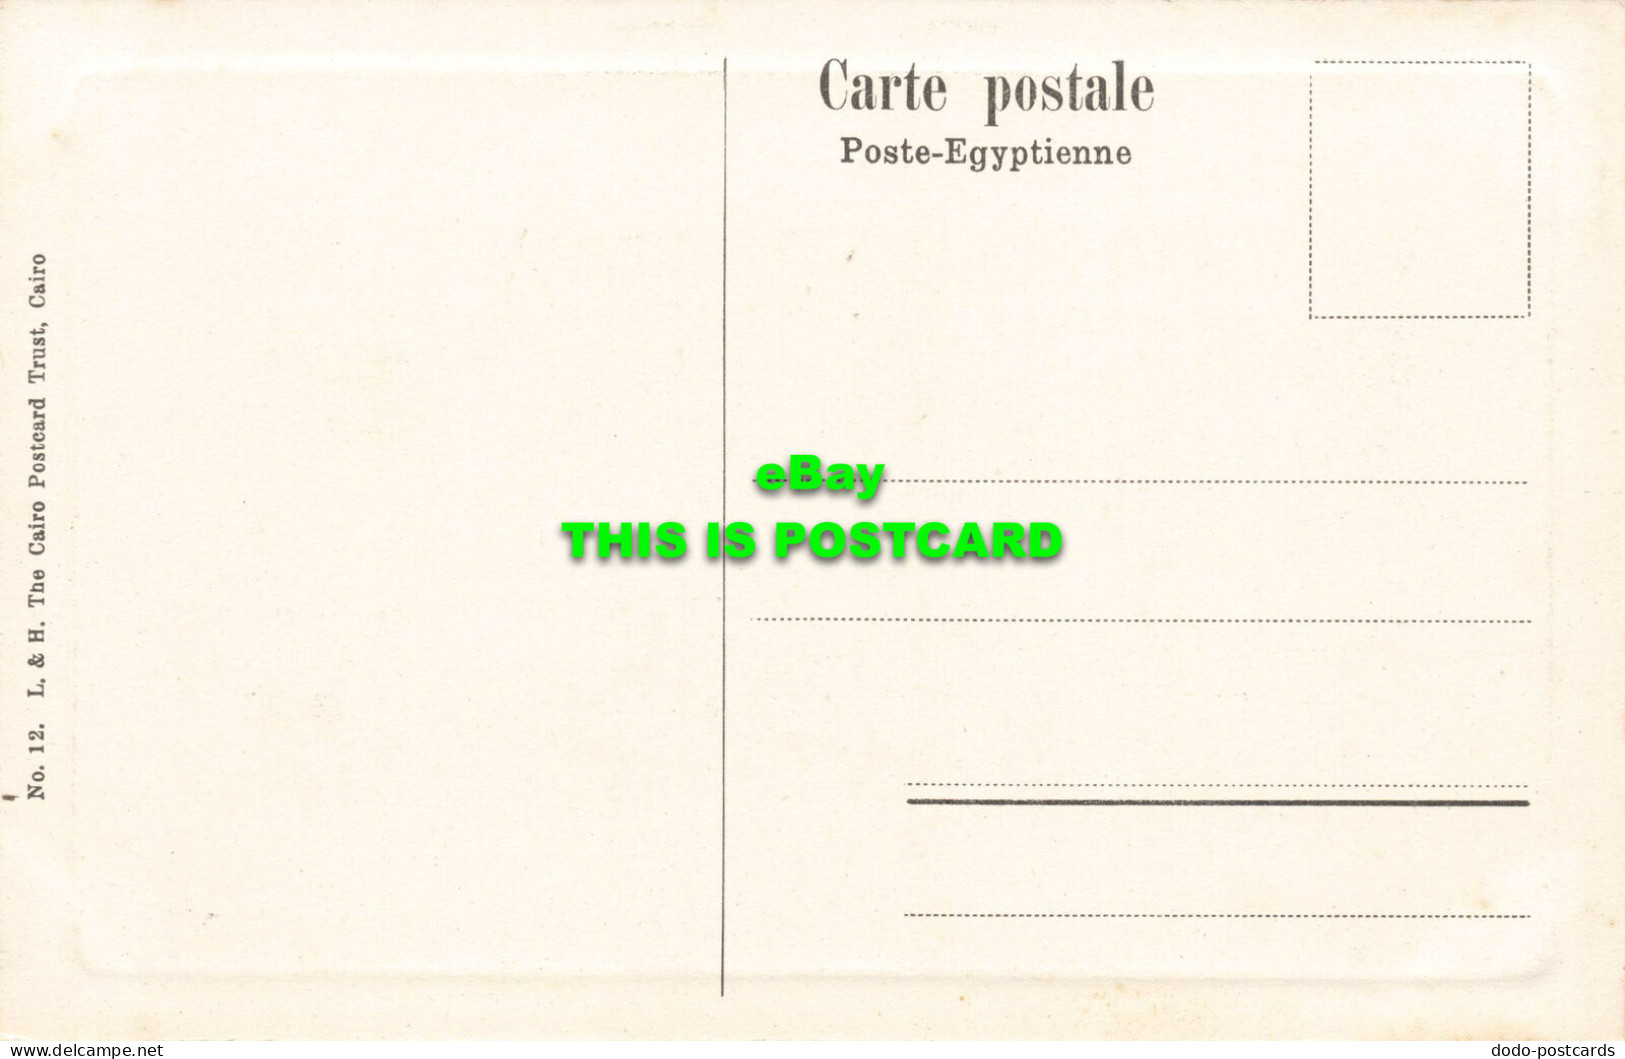 R568510 Egypte. Le Caire. Funerail Arabe. No. 12. L. And H. Cairo Postcard Trust - Mundo